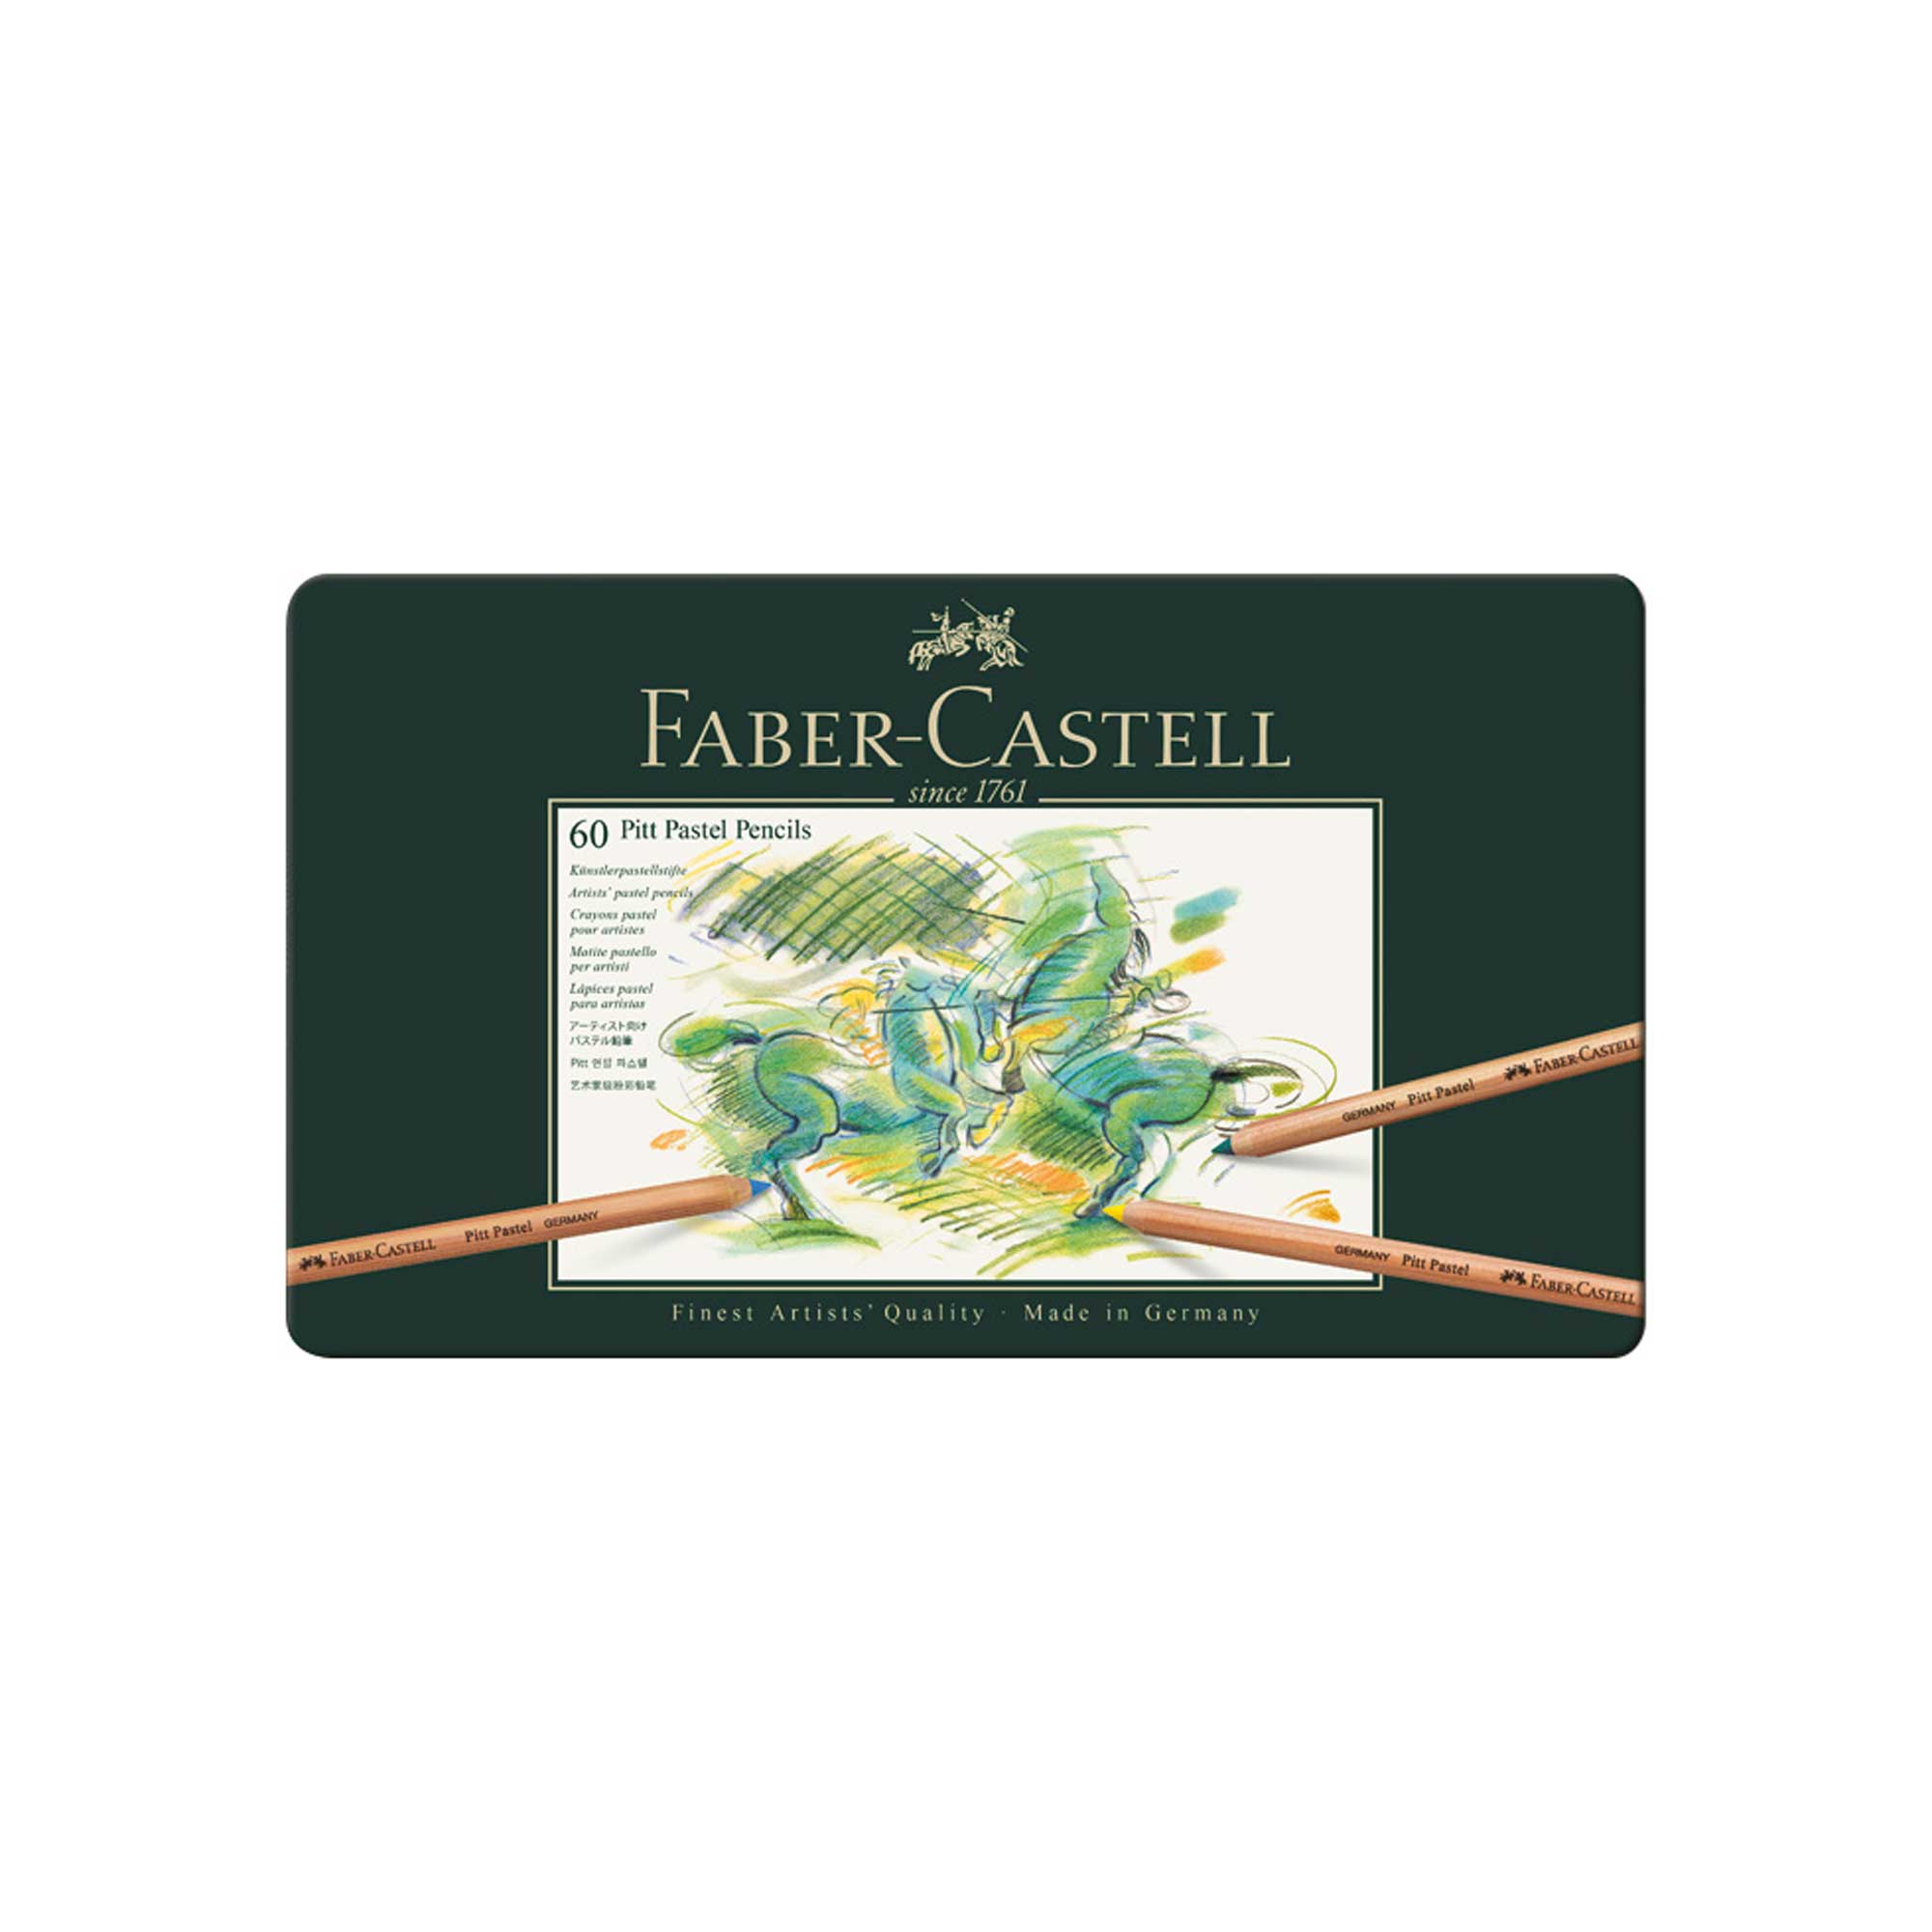 Faber-Castell Pitt PASTEL Pencil Tin of 60 Pencils - Tin